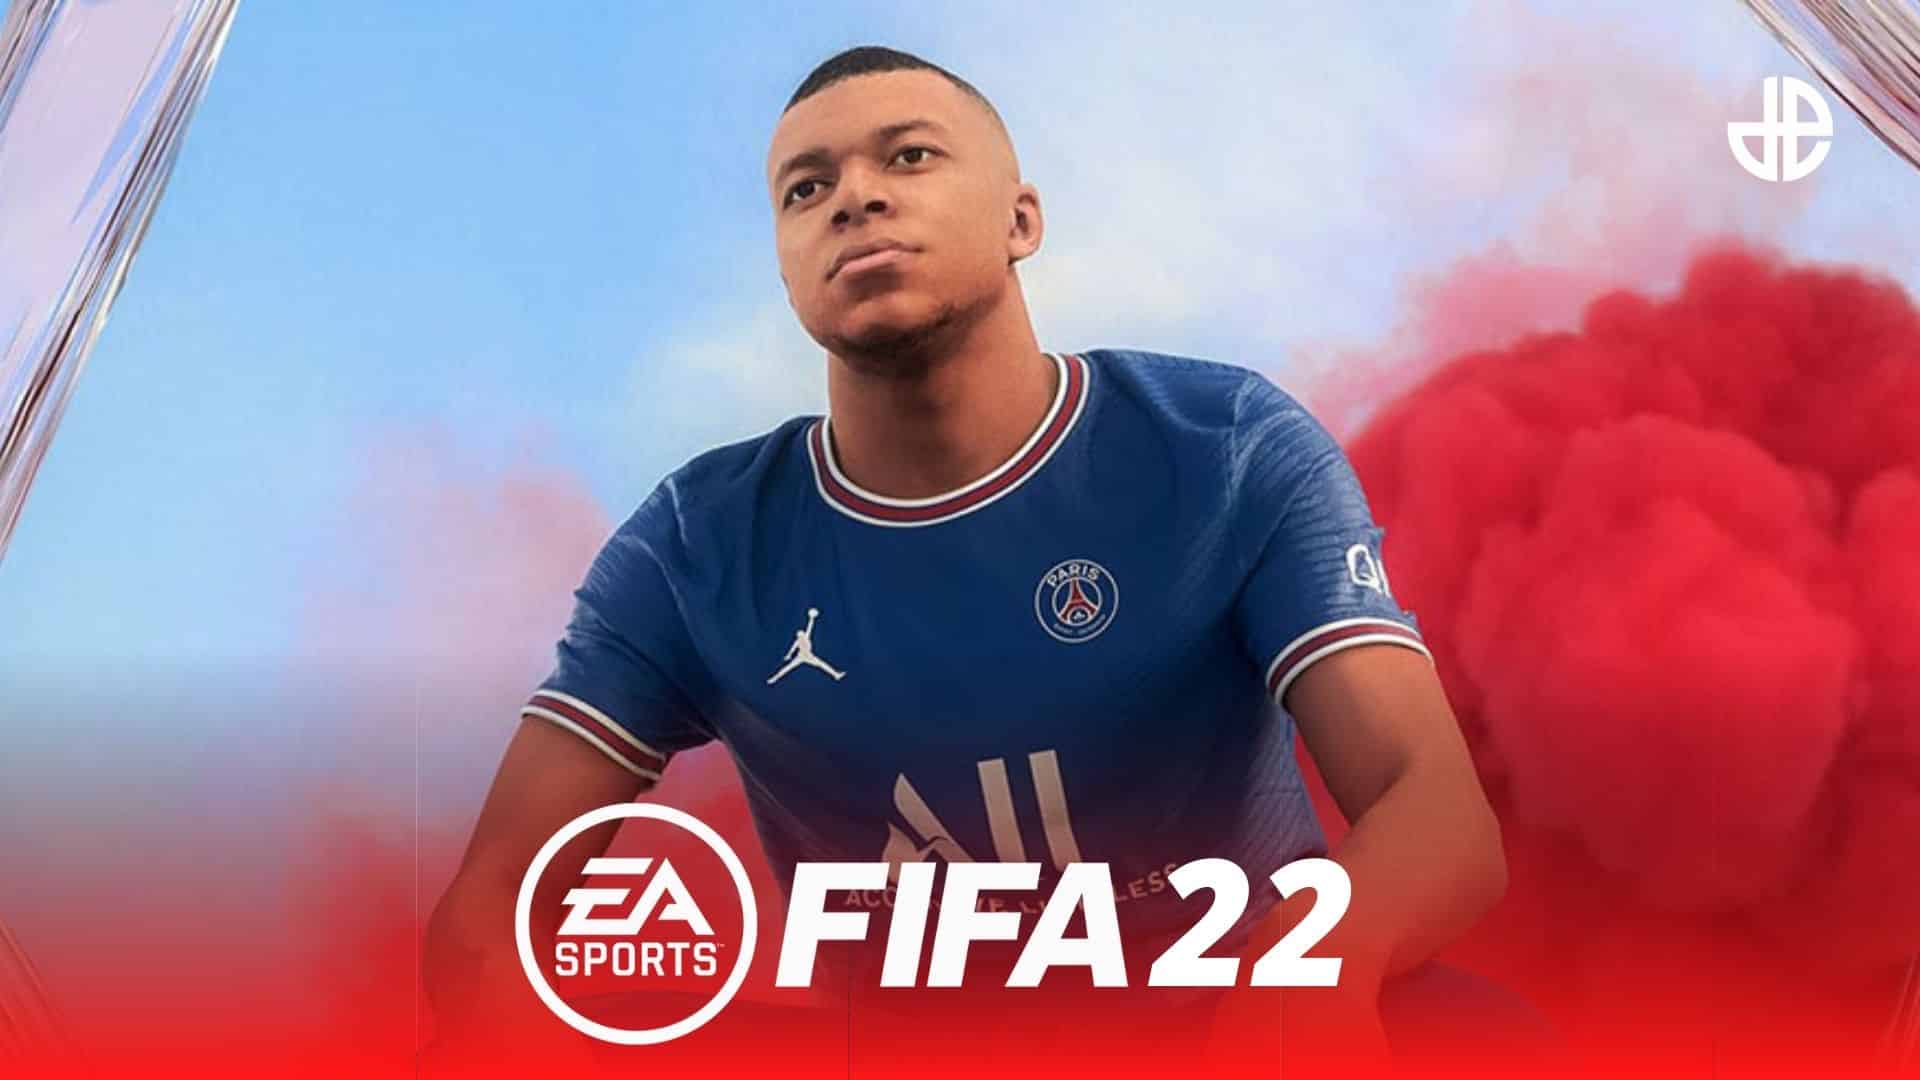 Fifa 22 10 Hour Trial (September 2021) Find New Details!